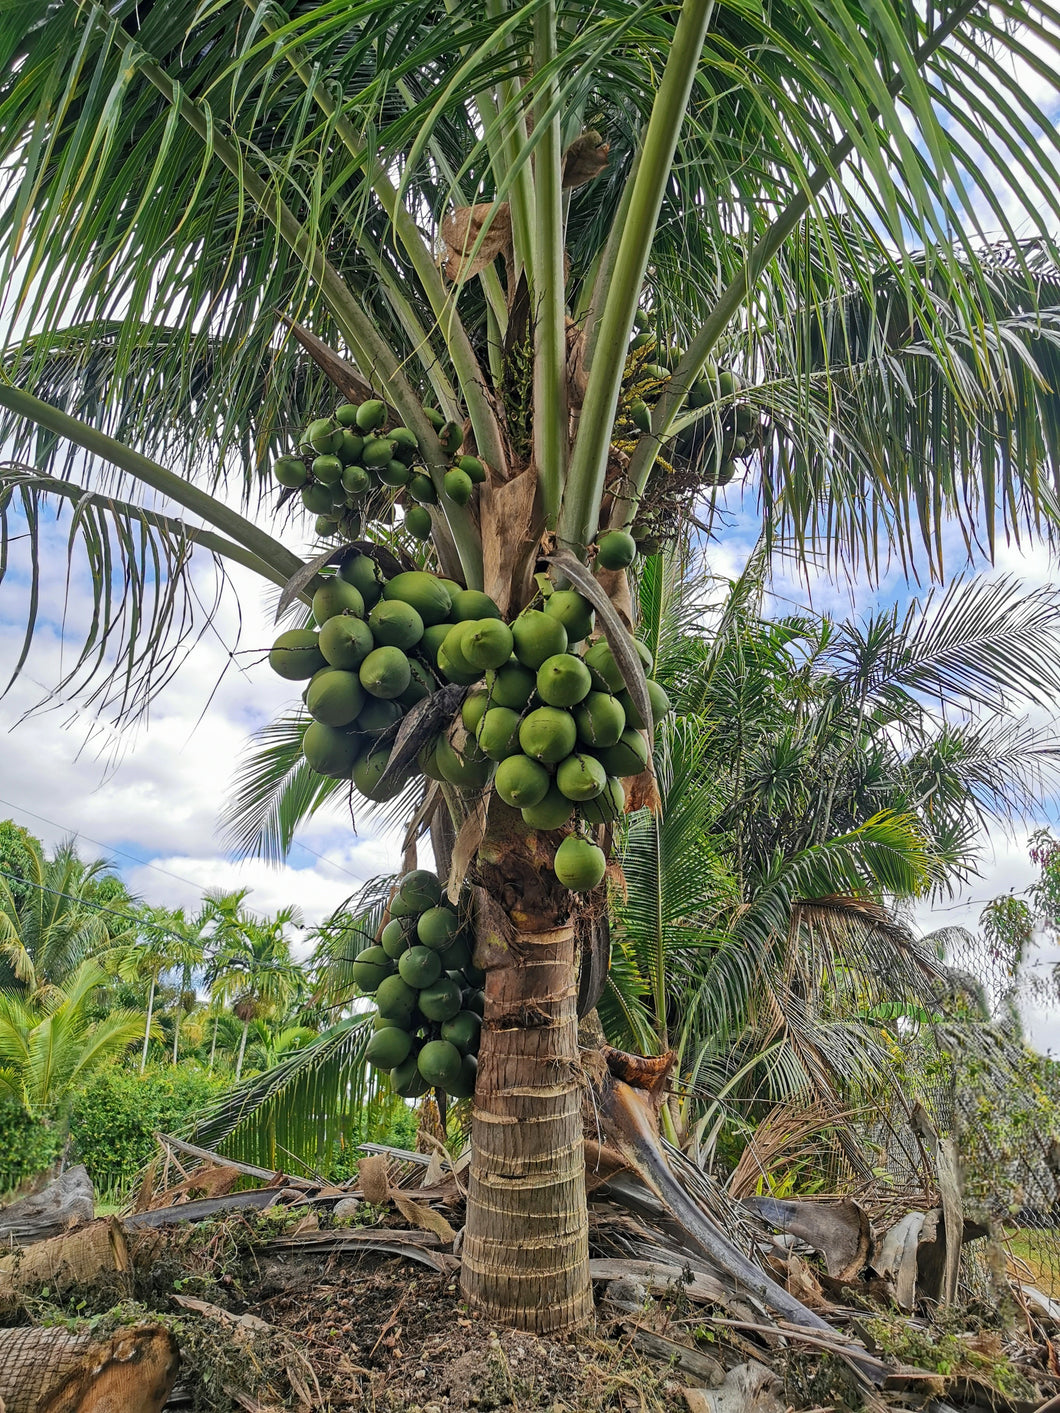 Jamaican / Malayan Dwarf Coconut Seed Cocos nucifera Tropical Palm Tree.